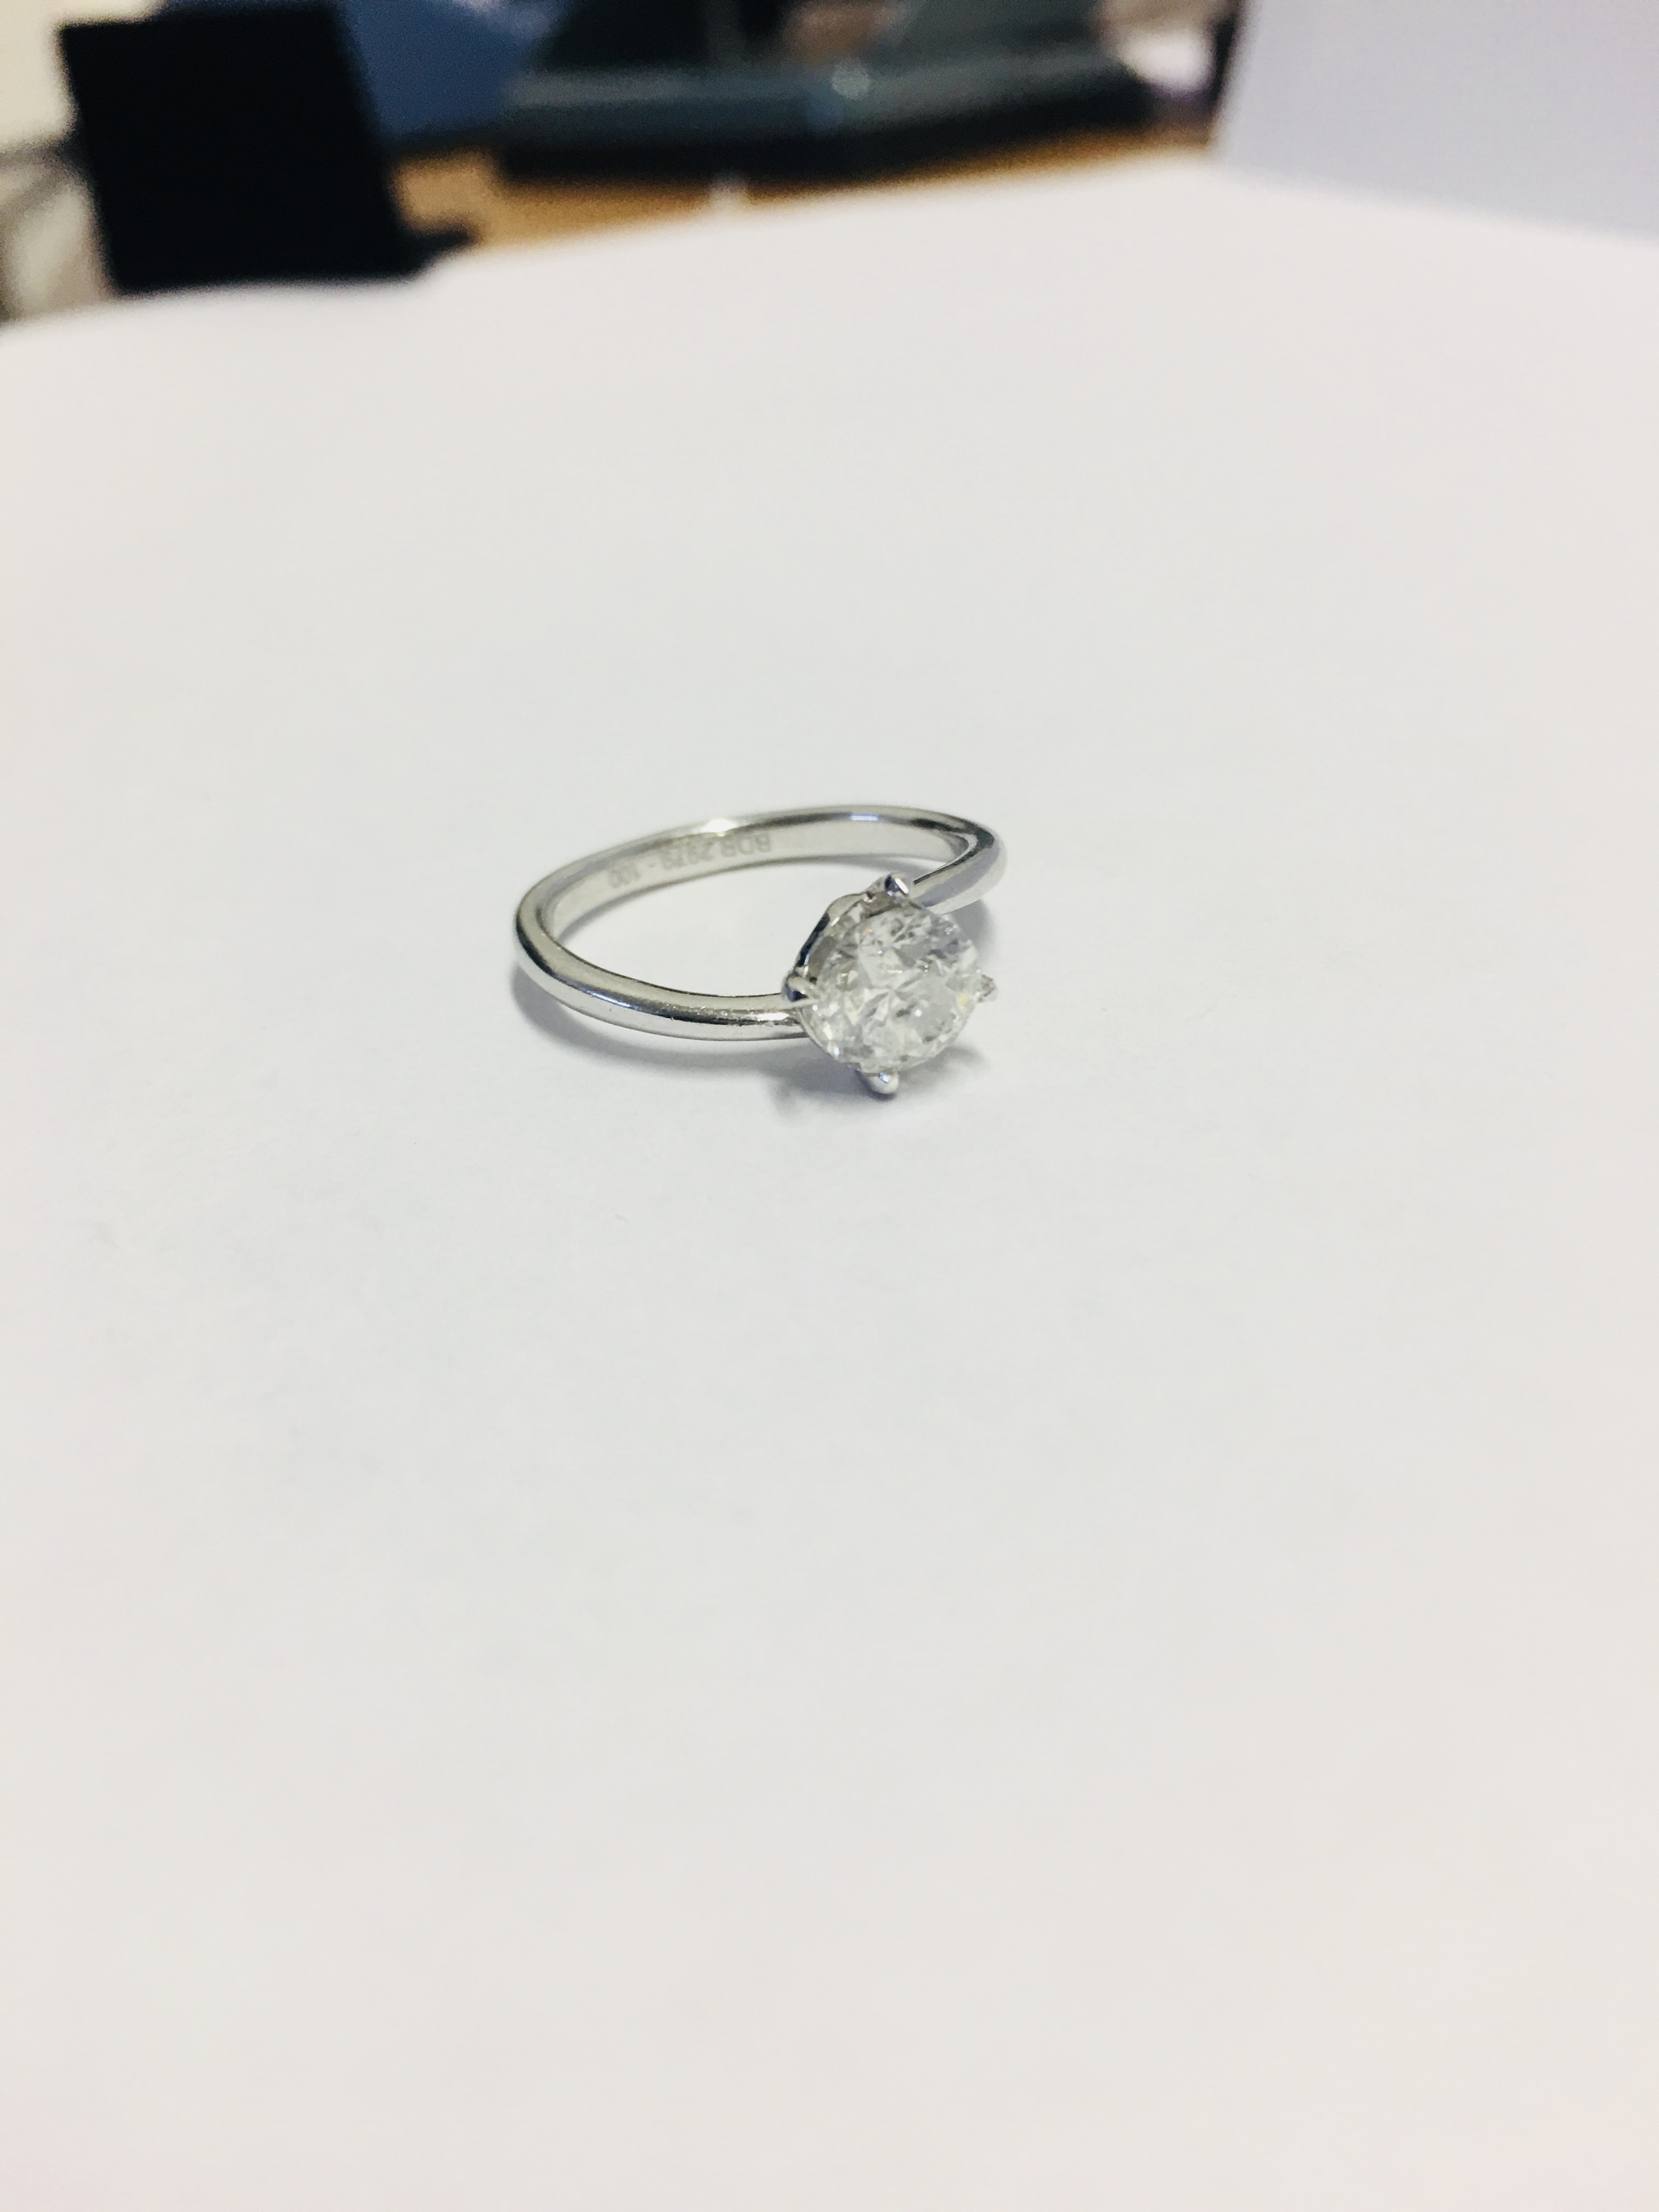 1Ct Brilliant Cut Diamond Solitaire Ring, - Image 6 of 6